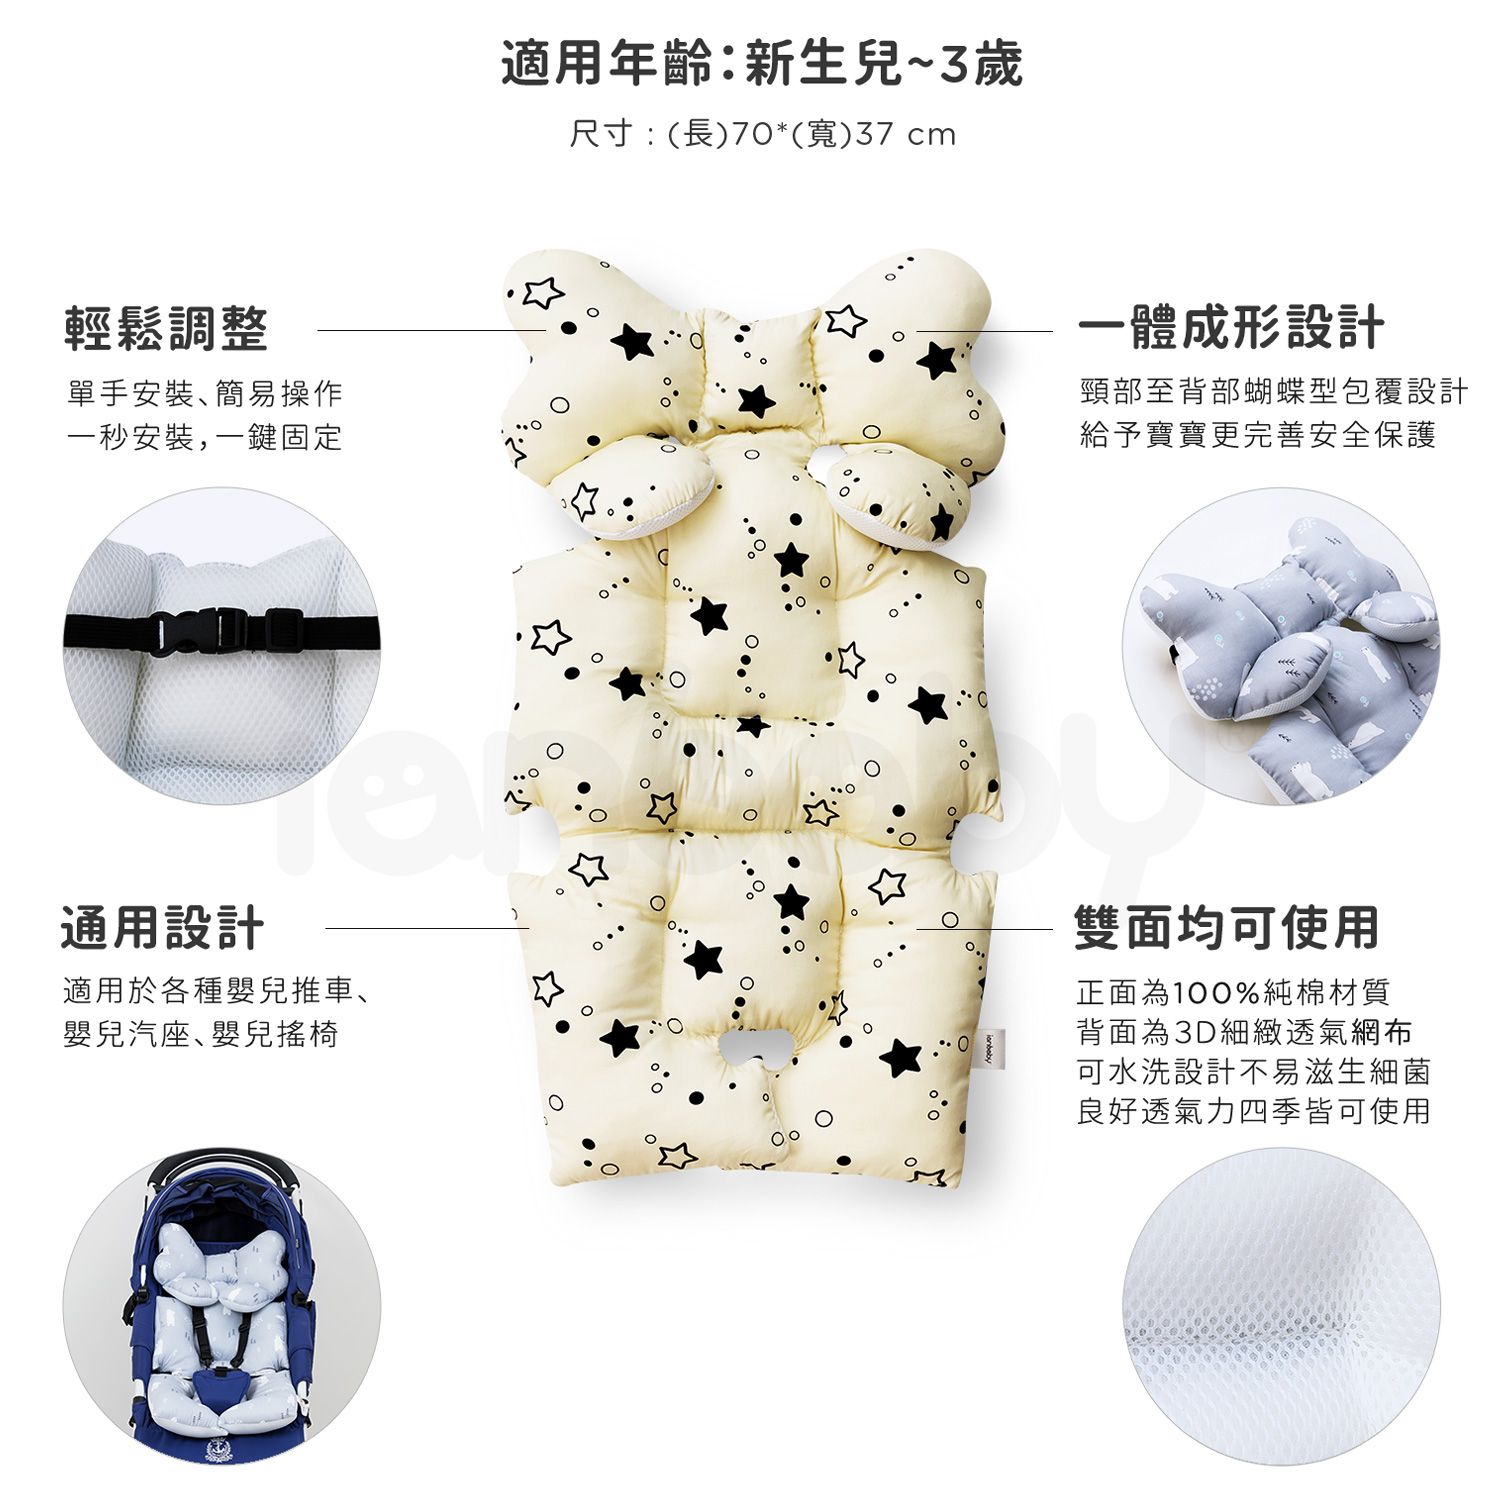 O-BS_07.jpg/ ianbaby 韓製全身包覆墊適用年齡為新生兒至3歲，尺寸為70cm*37cm，純棉與透氣網布雙面皆可使用，一體成形設計給予寶寶更完善安全的保護。